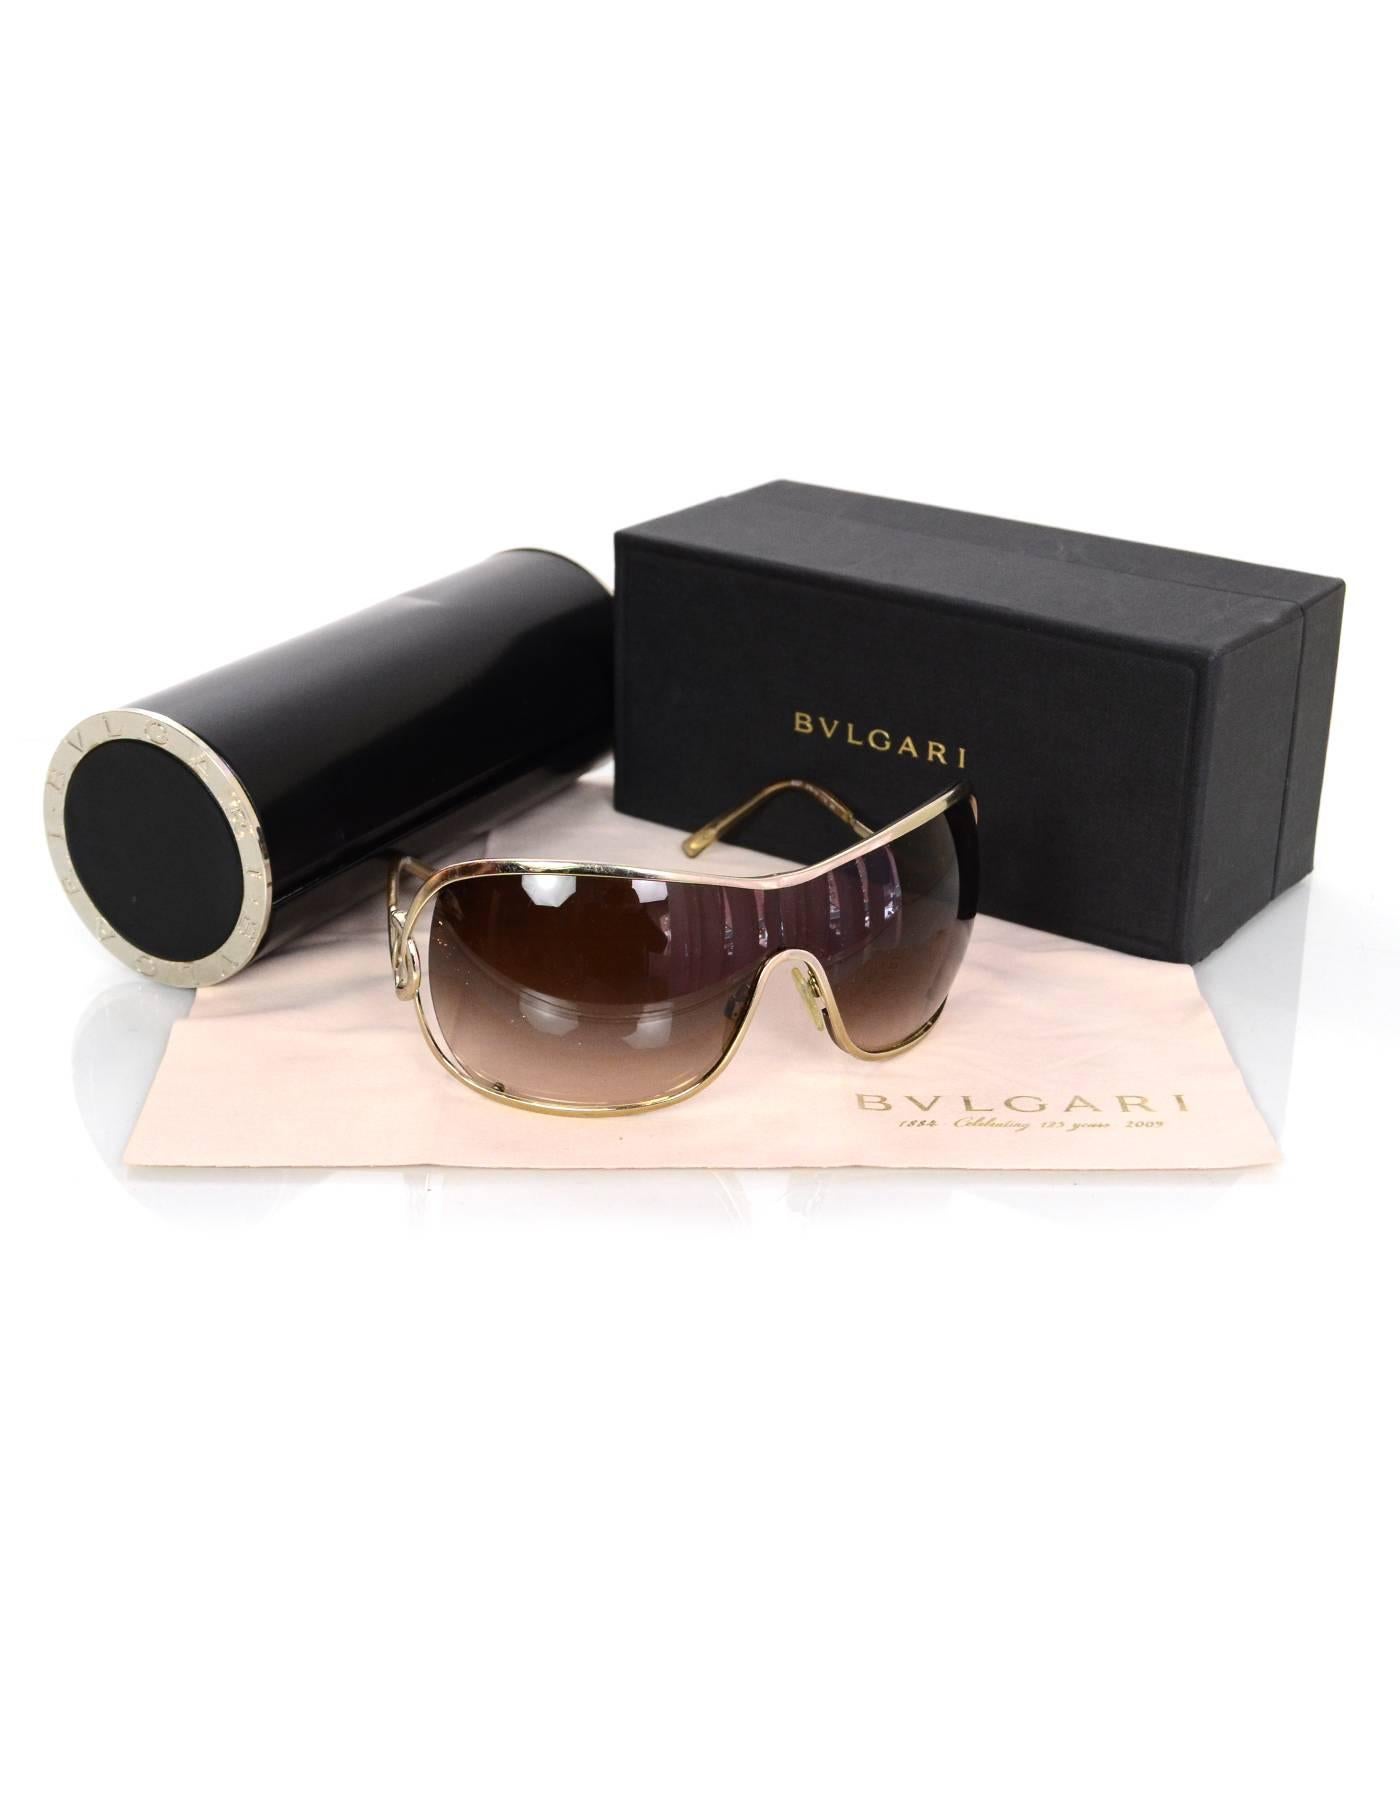 Bulgari Gold Frame Sunglasses 1